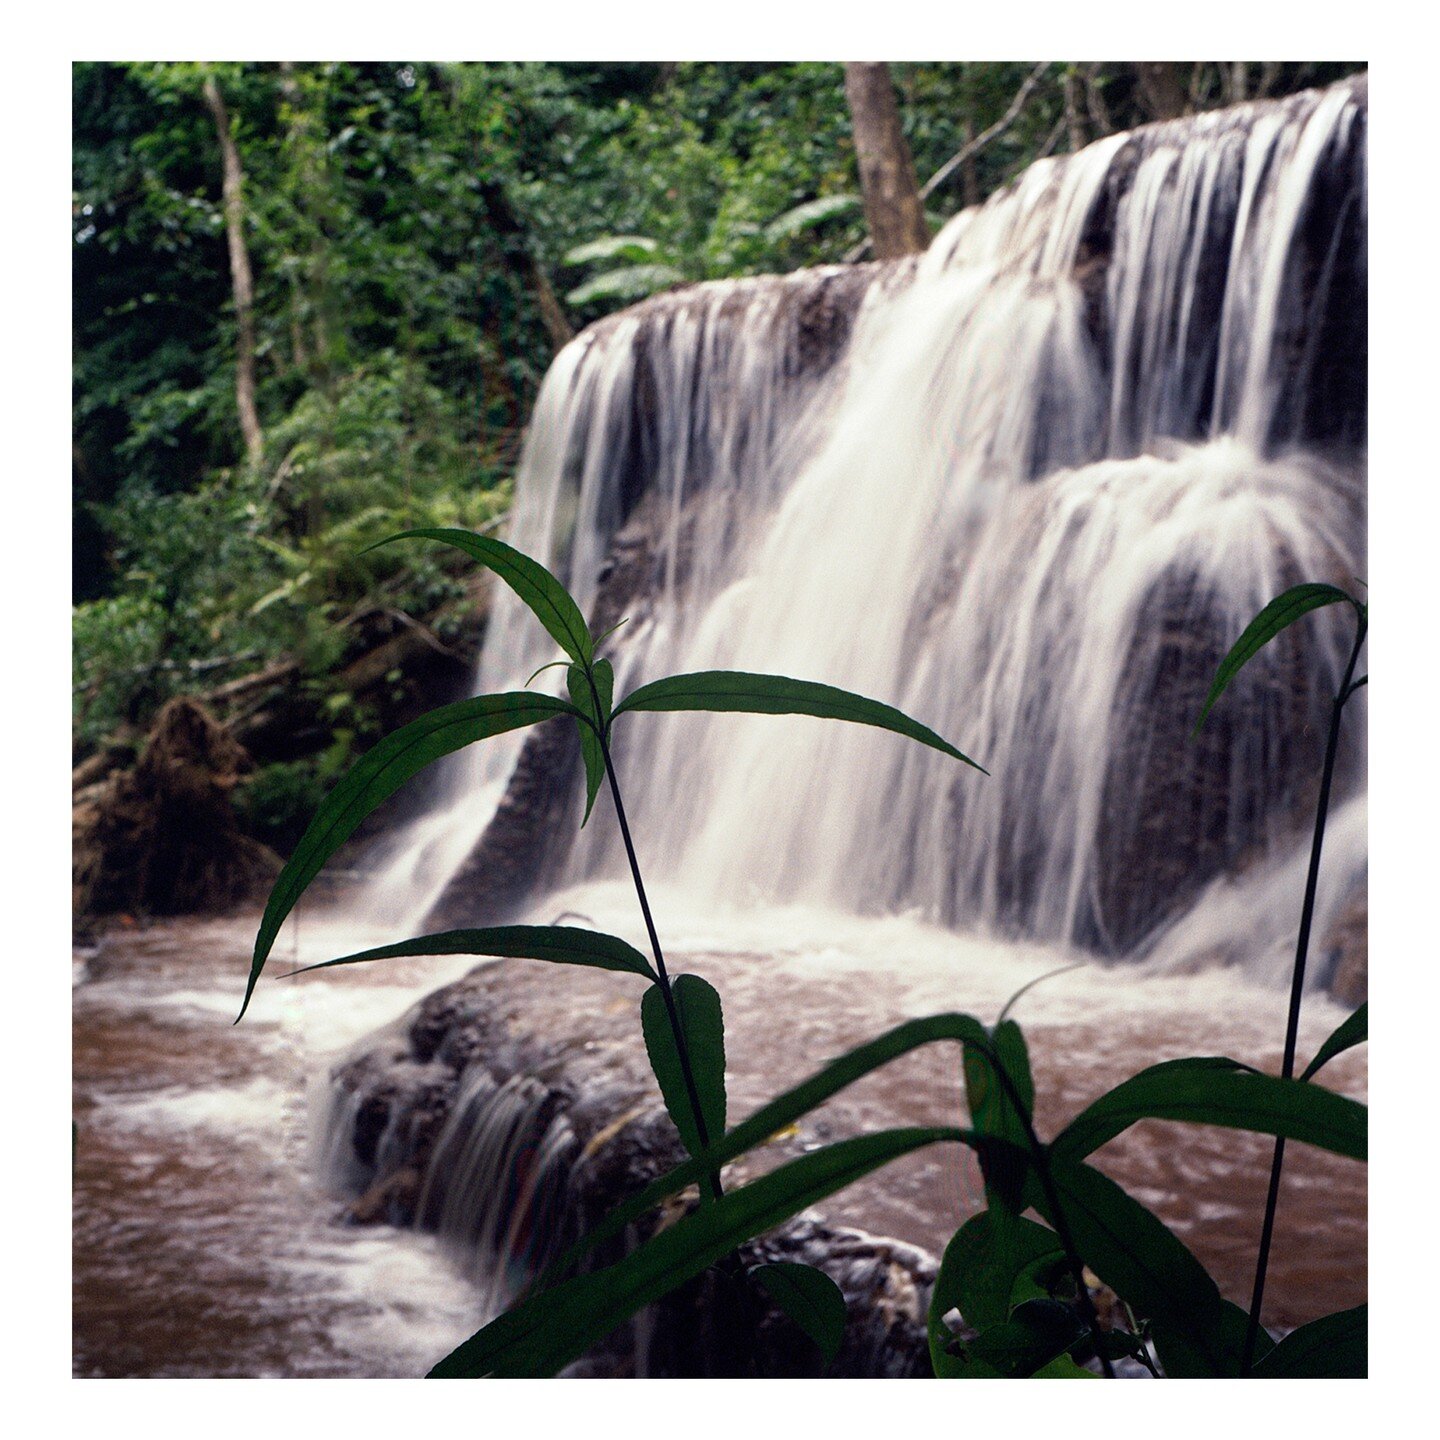 Waterfalls | Phop Phra District, Thailand

📷 Yashica Mat-124 G
🎞 Kodak Gold 200

#thailand #gold200 #kodakprofessional #shootfilm #filmisnotdead #staybrokeshootfilm #dcfilmcollective #mediumformat #yashica #yashicamat124g #120film